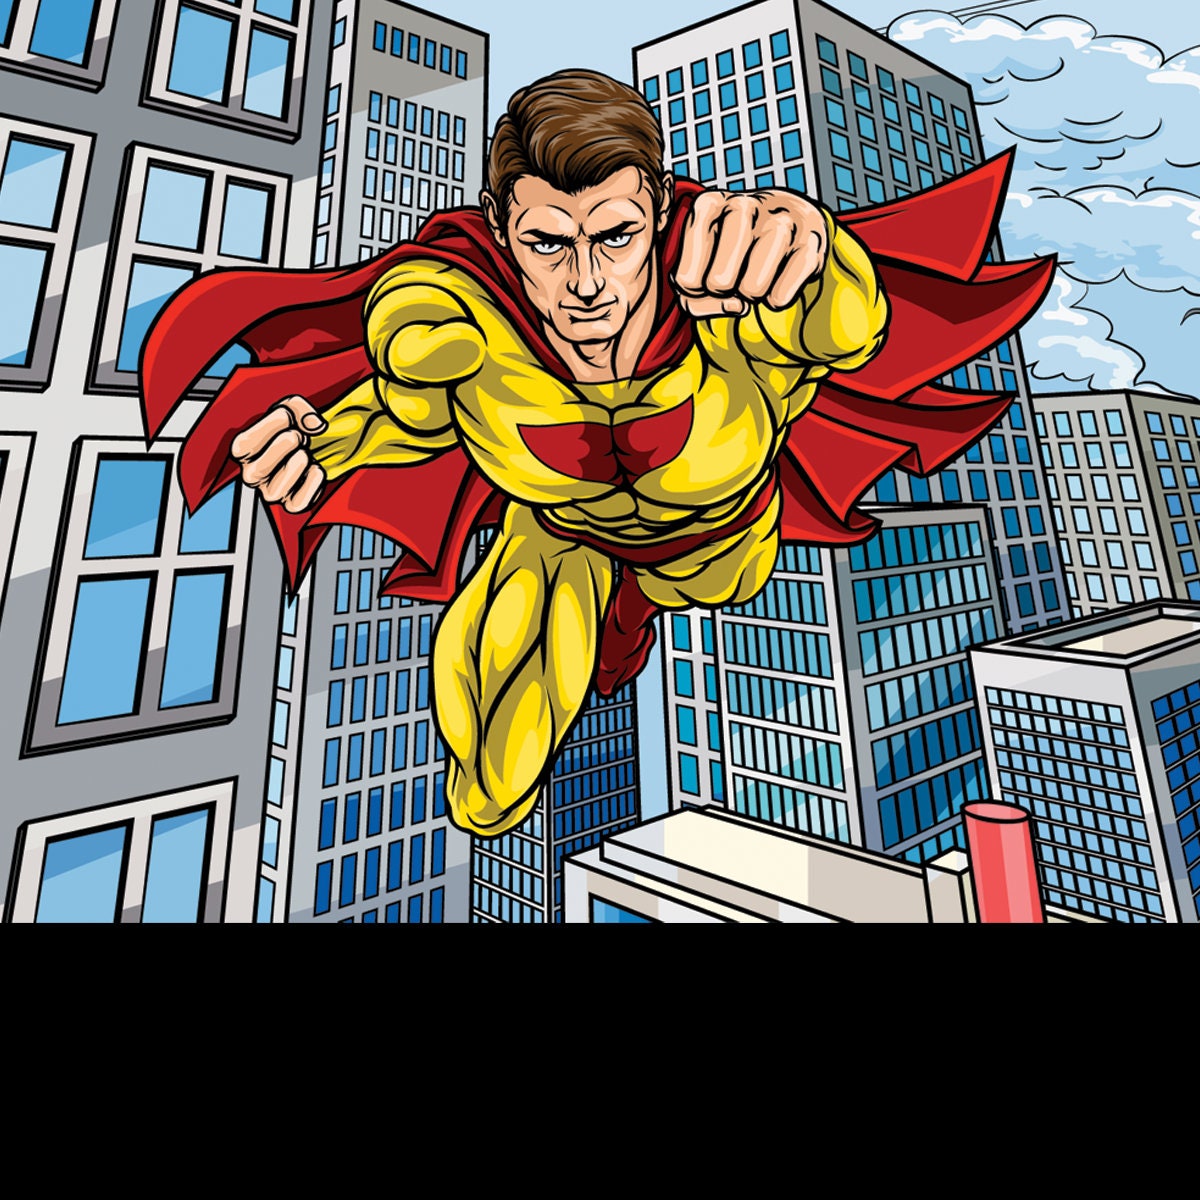 Cartoon Superhero in a Pop Art Comic Book Style Flying Over a City Wallpaper Boy Bedroom Mural